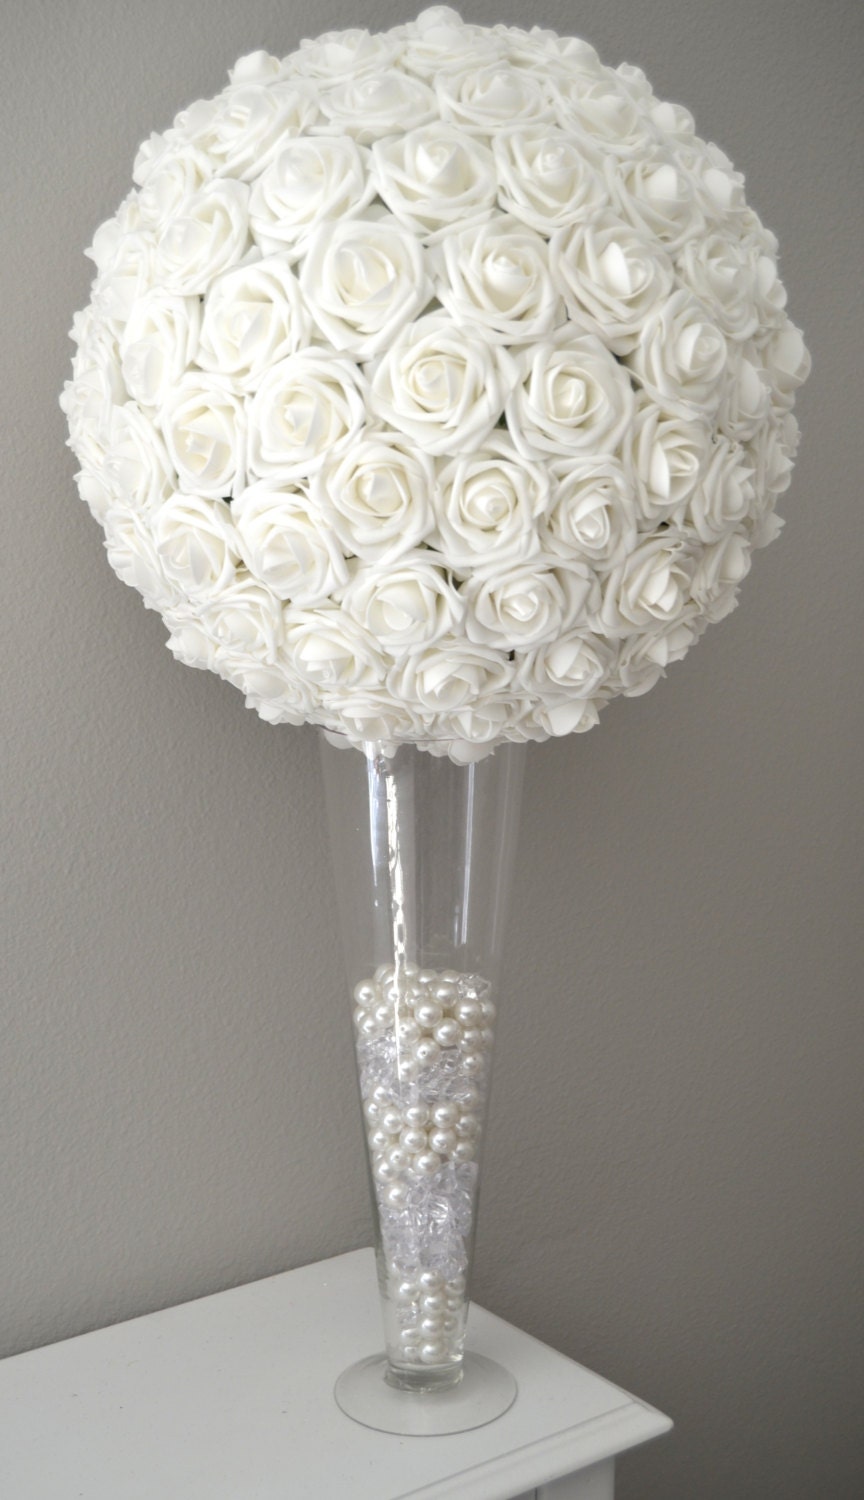 WHITE FLOWER BALL . Kissing Ball. Wedding Centerpiece. Flower